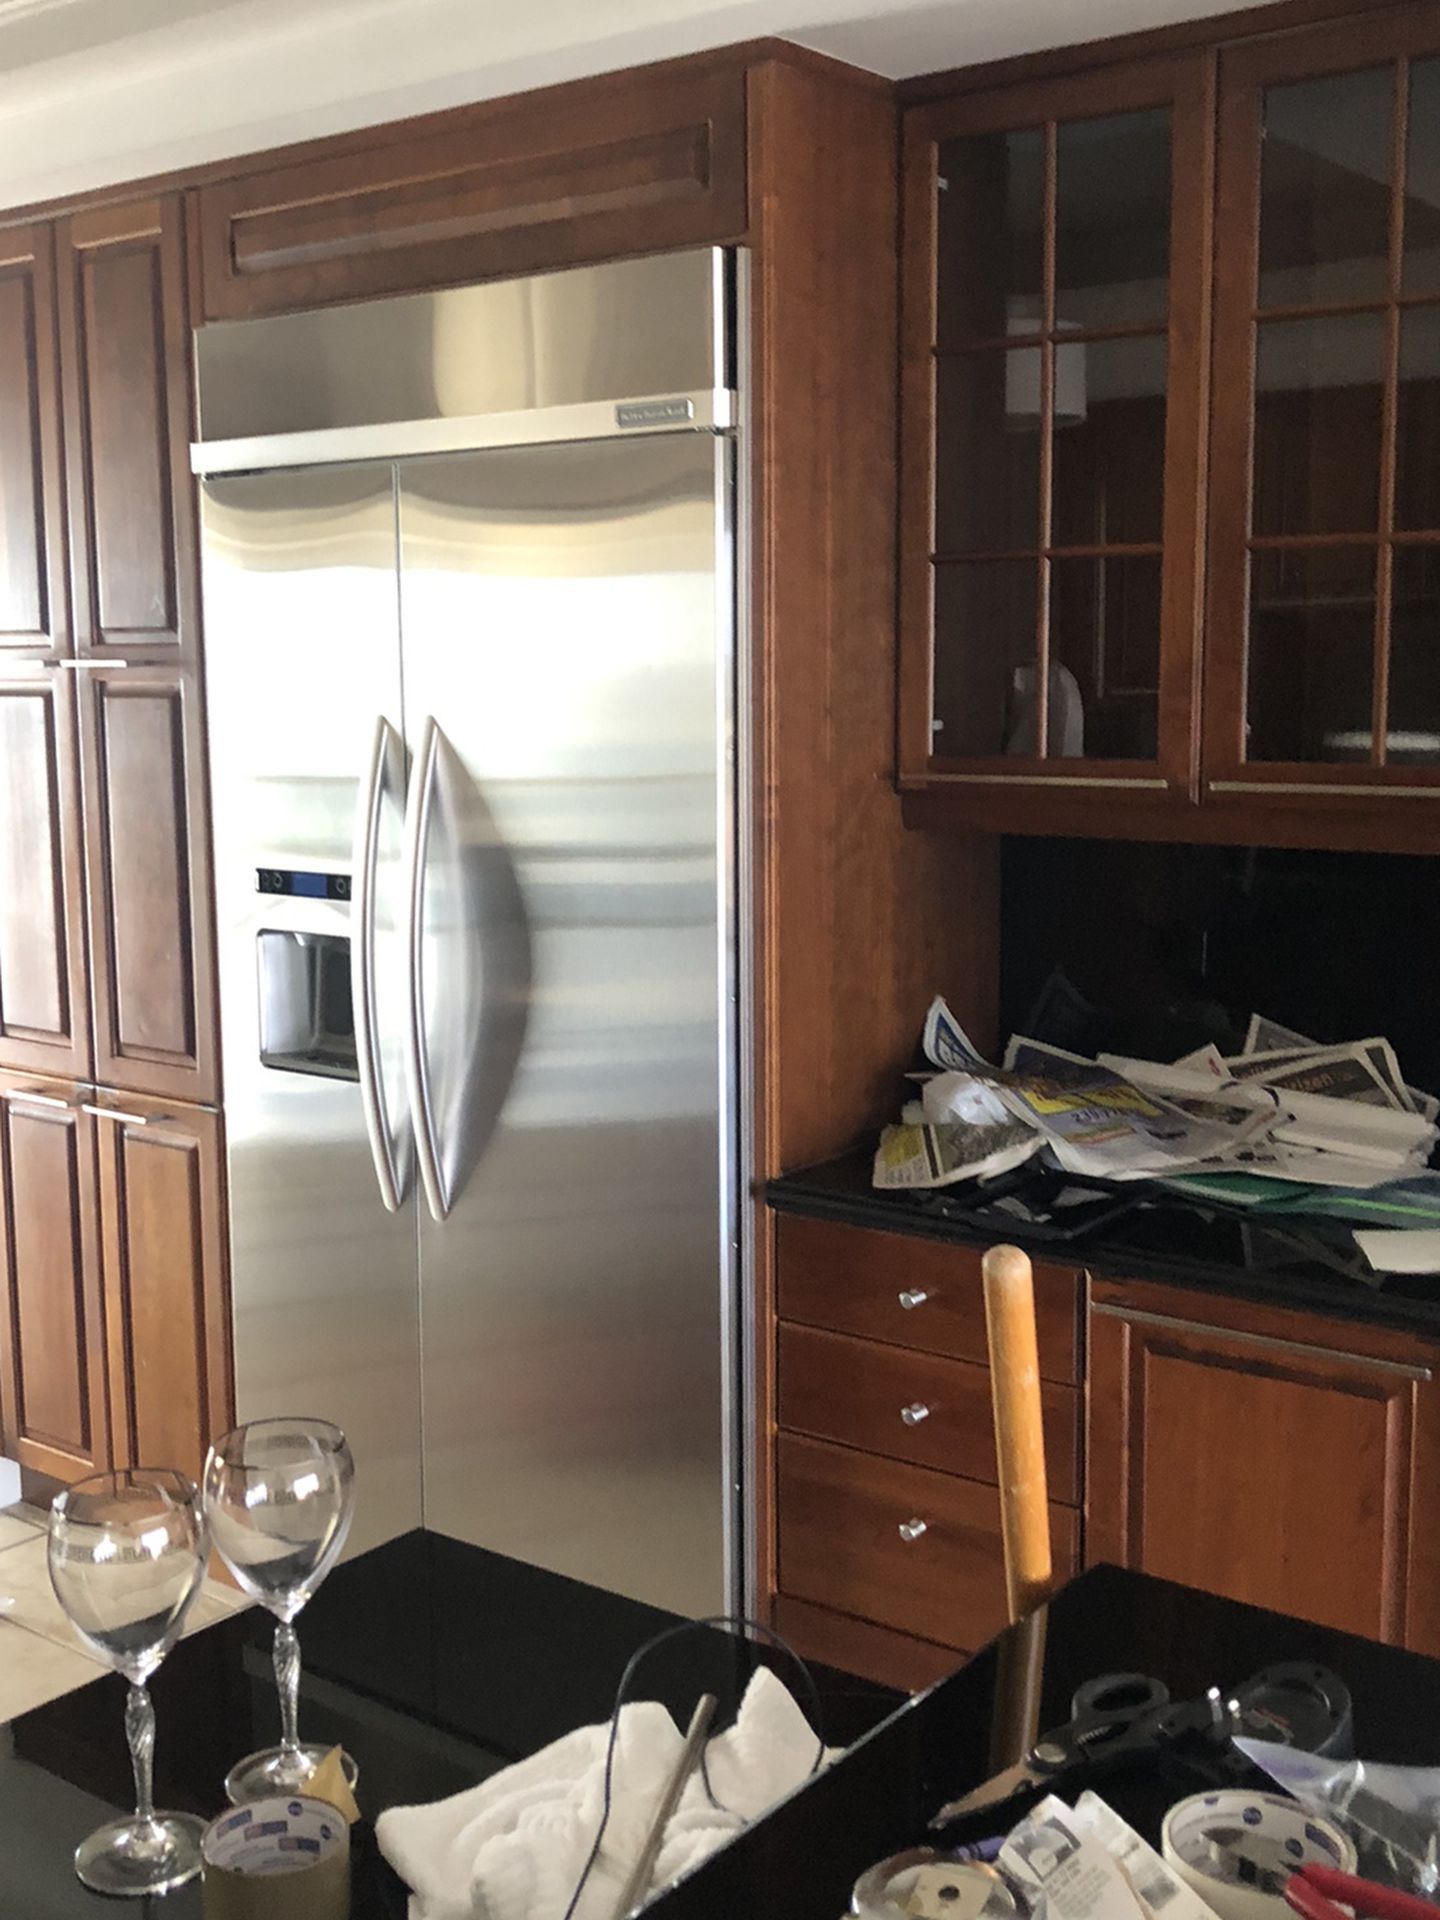 42” KitchenAid Refrigerator/Freezer, Great Condition